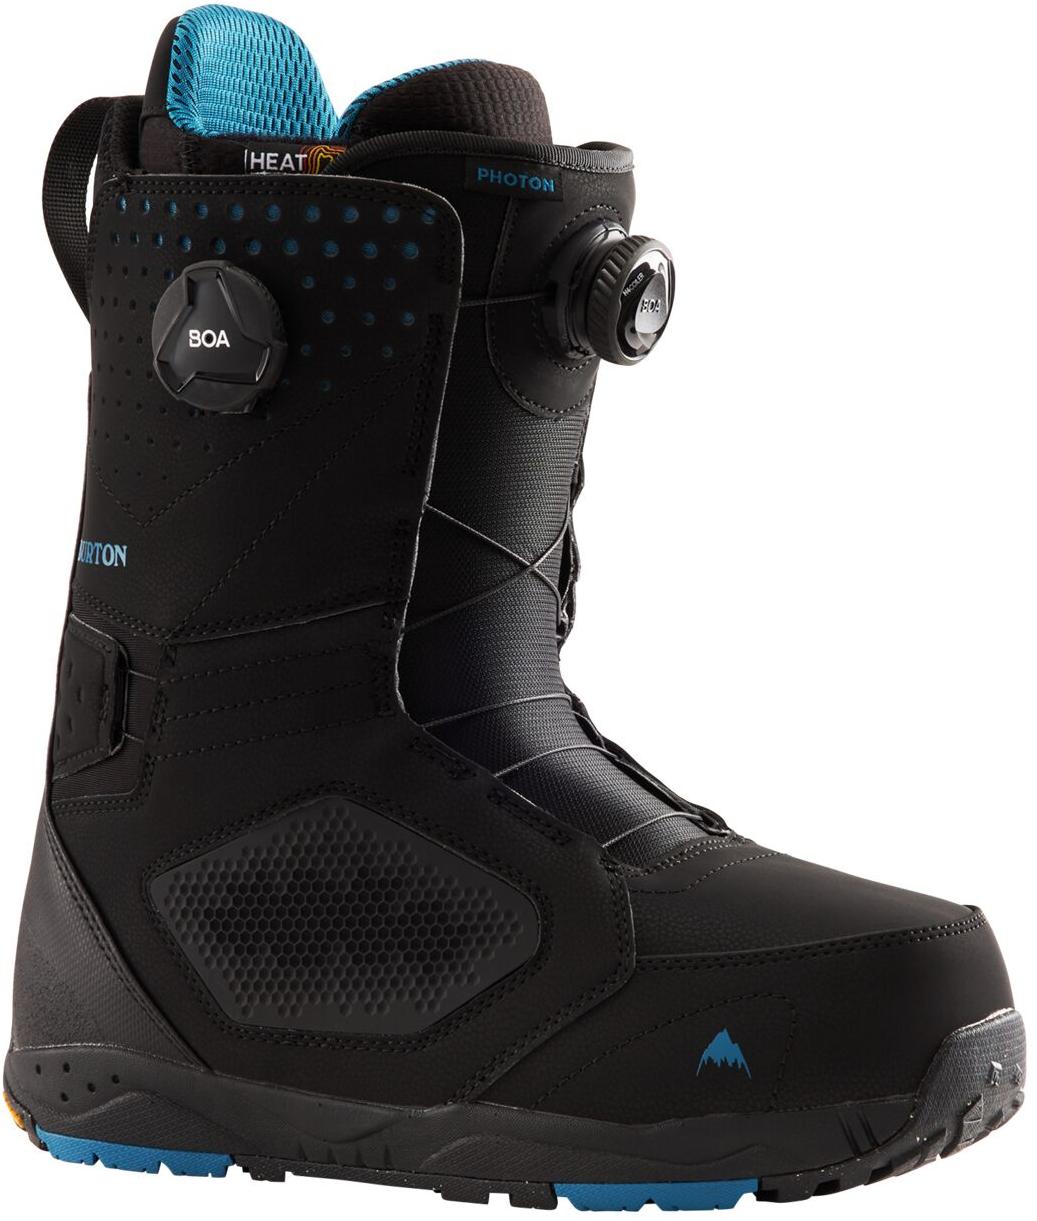 фото Ботинки для сноуборда burton photon boa 2021/2022, black, 27,5 см